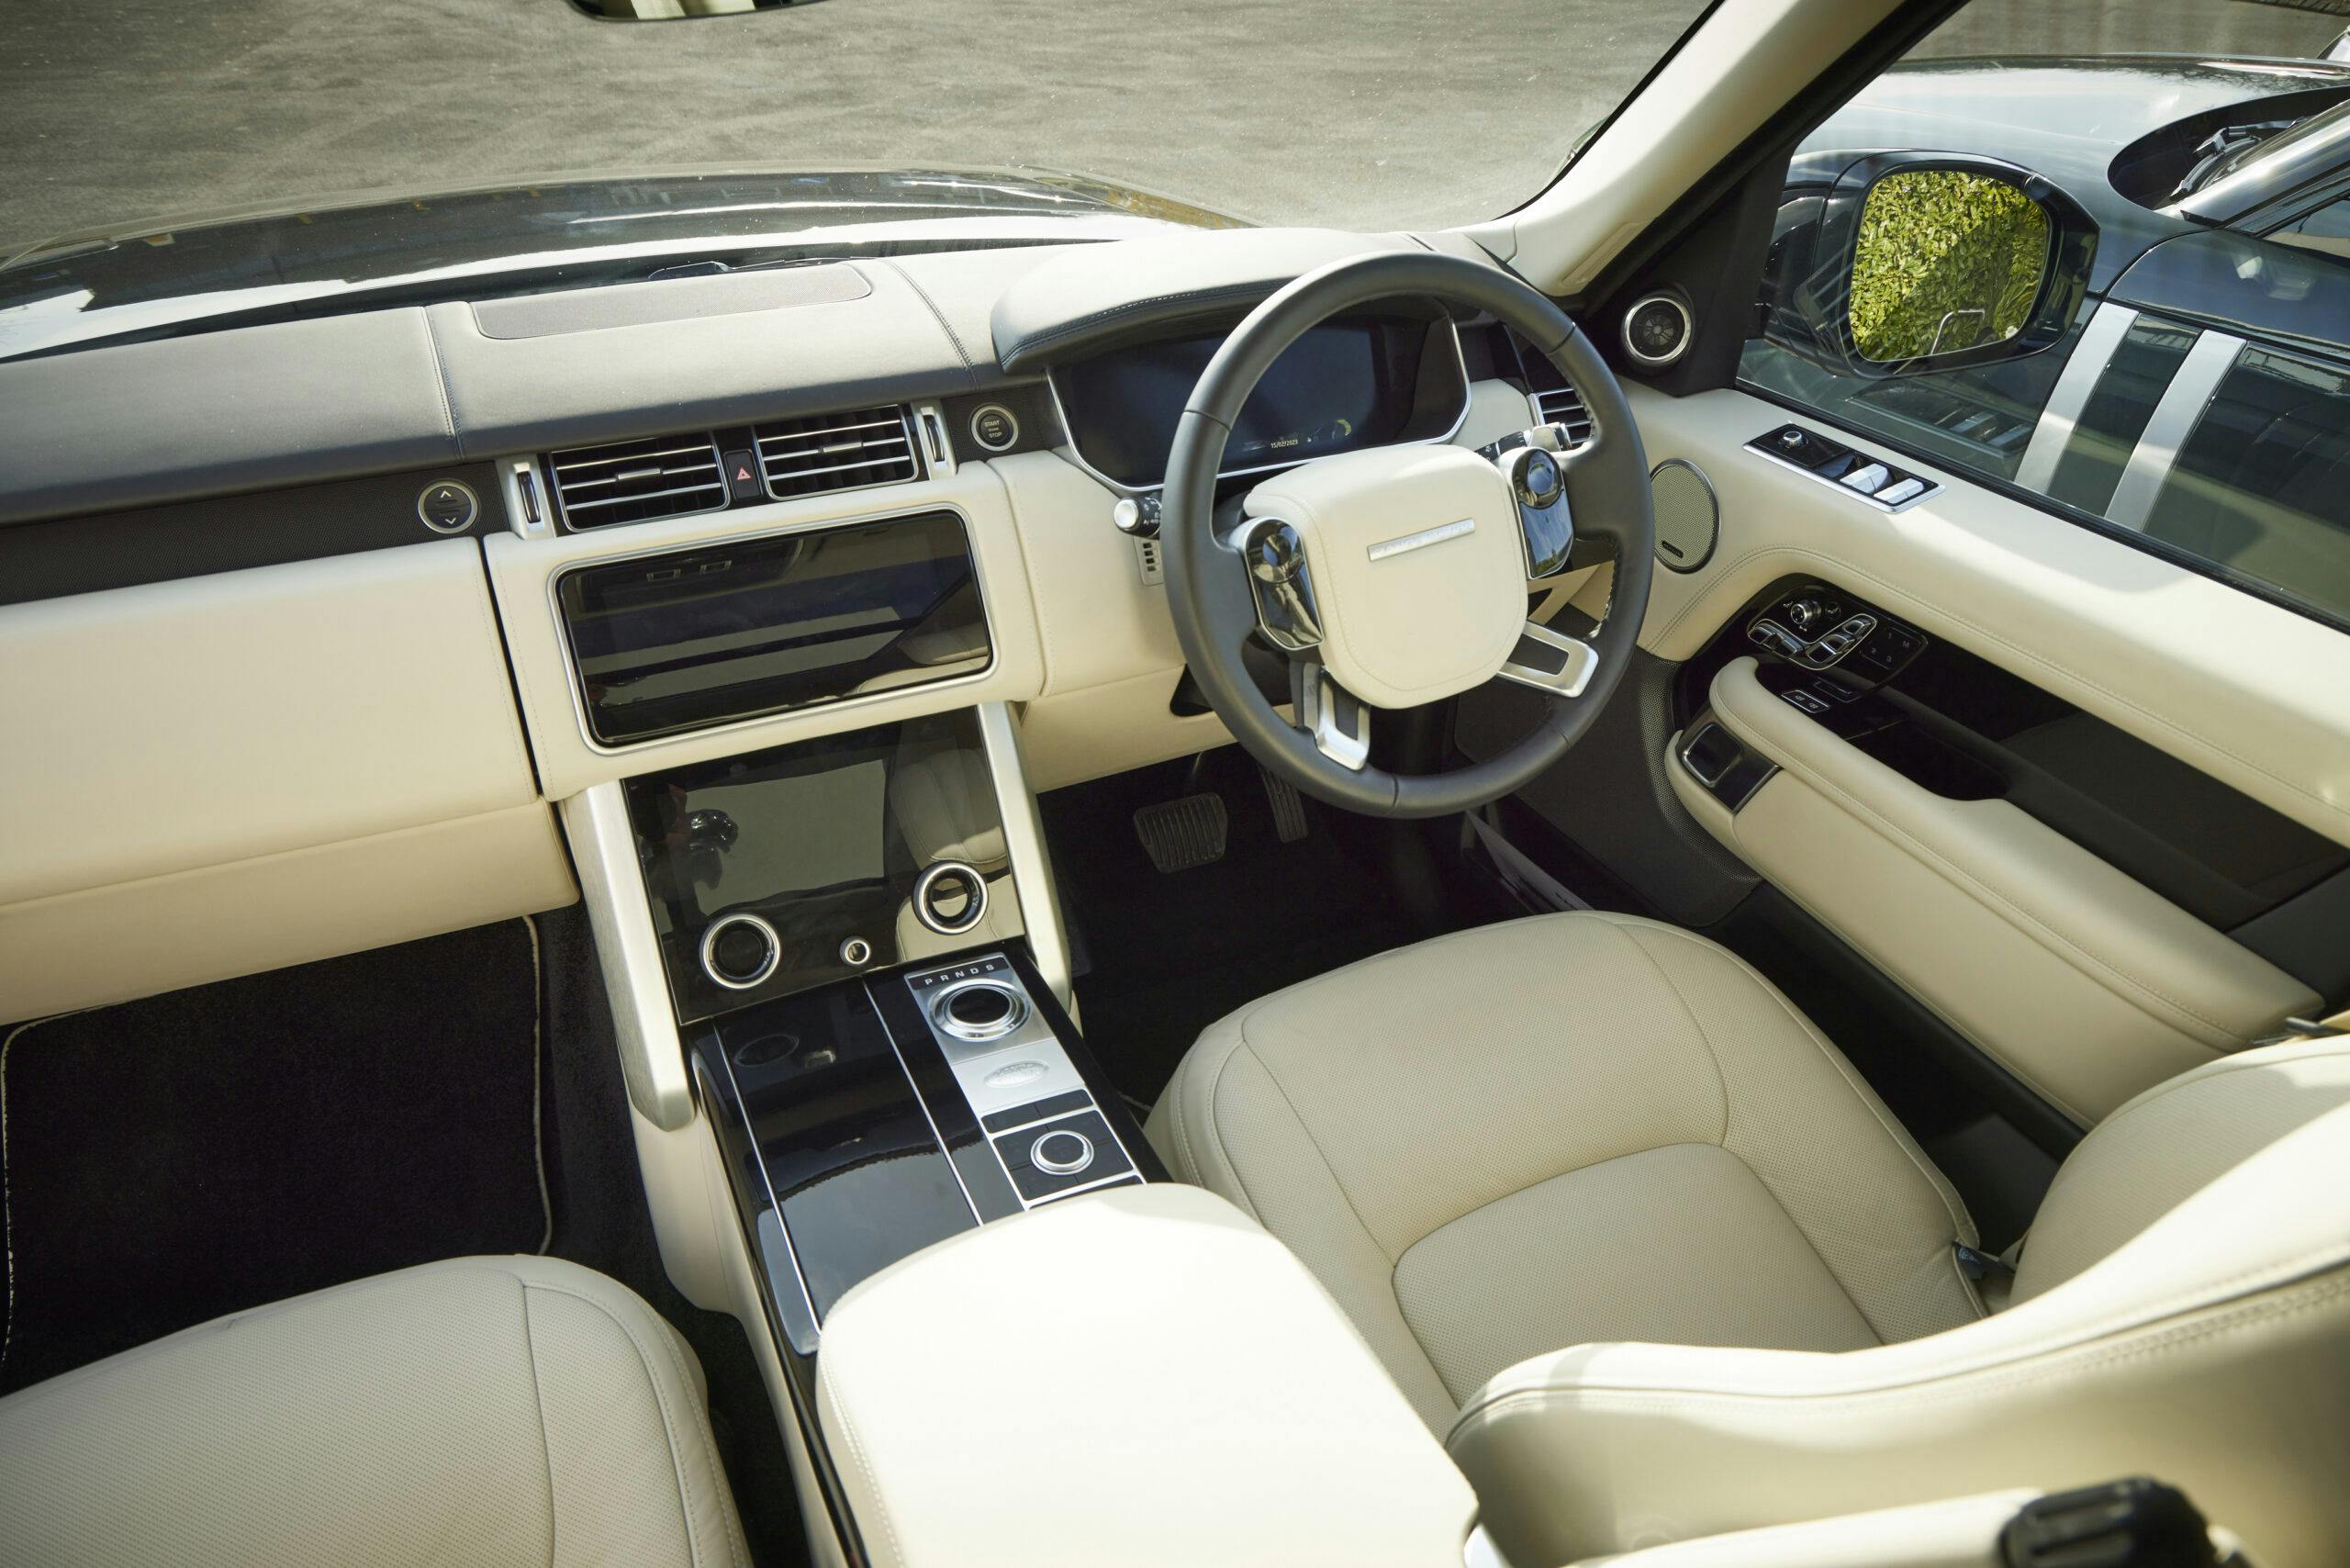 2022 L405 Range Rover interior